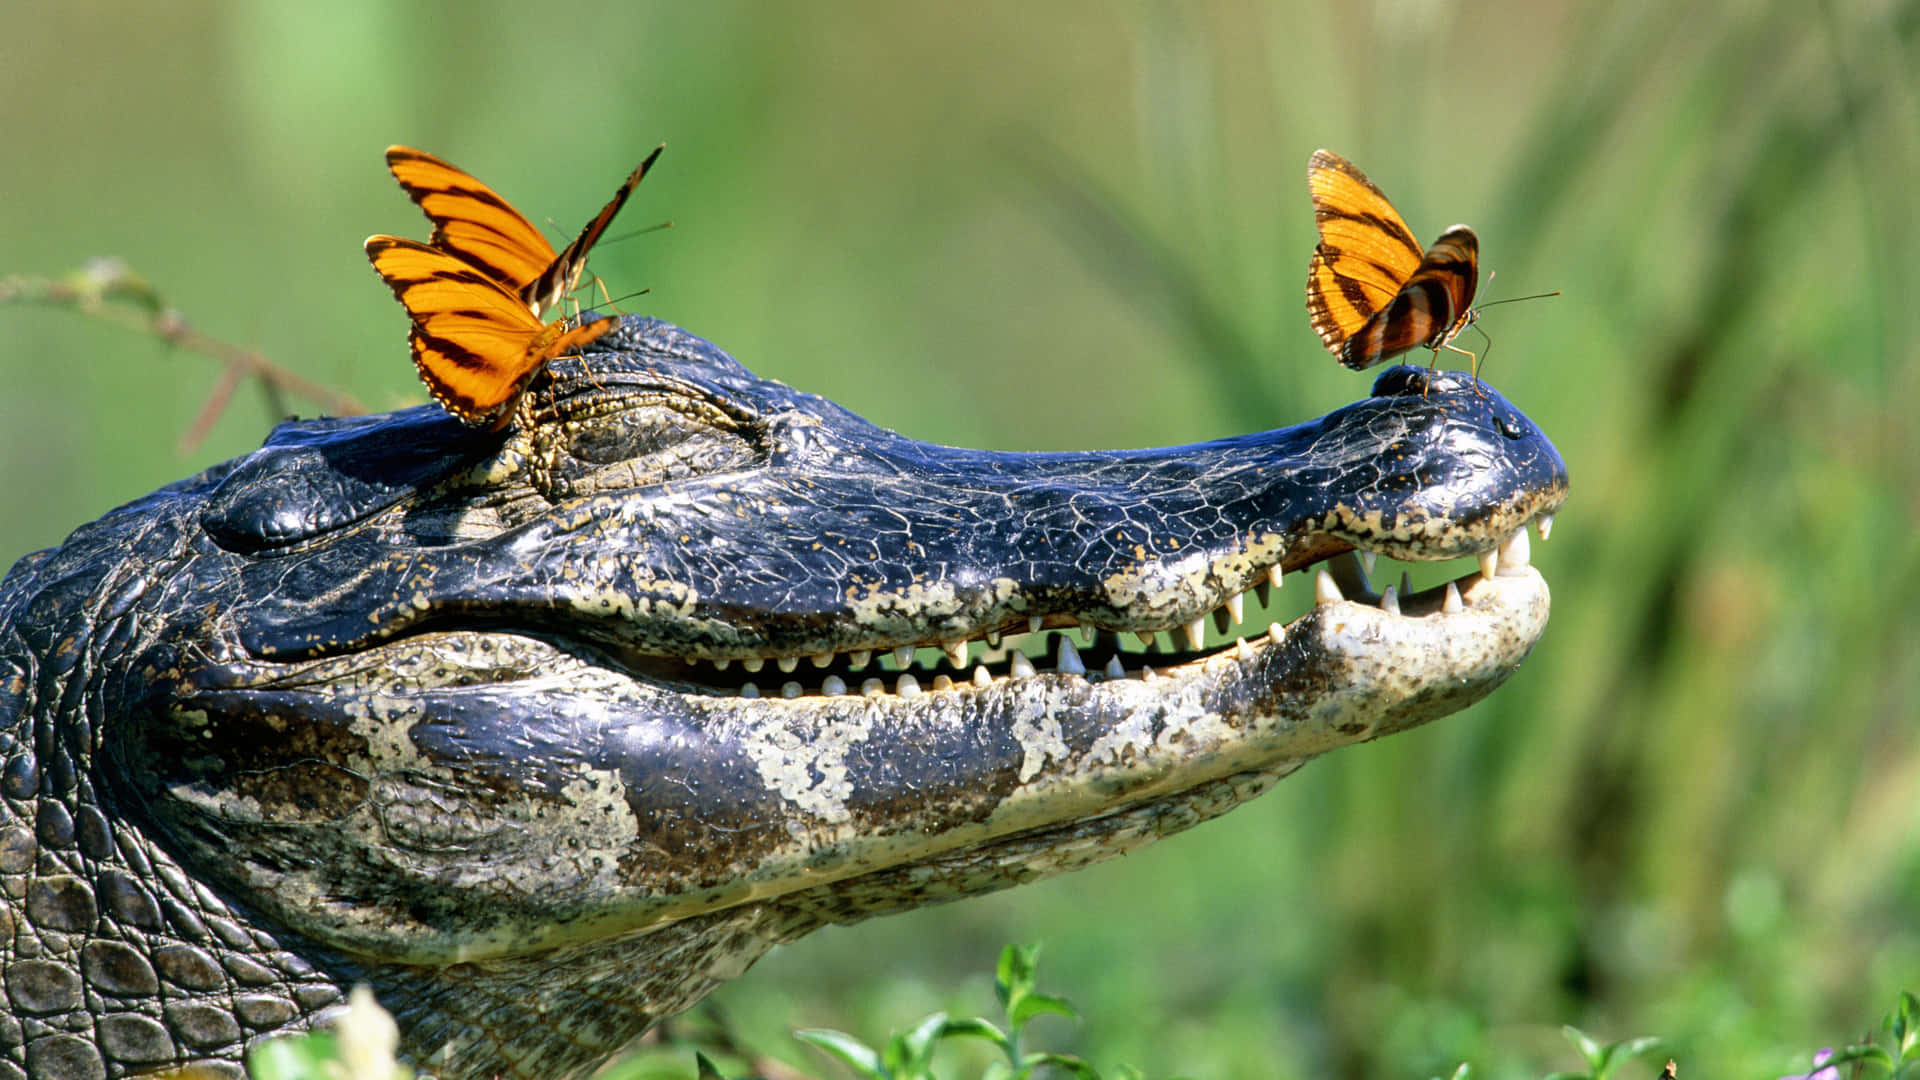 Fierce Alligator in its natural habitat